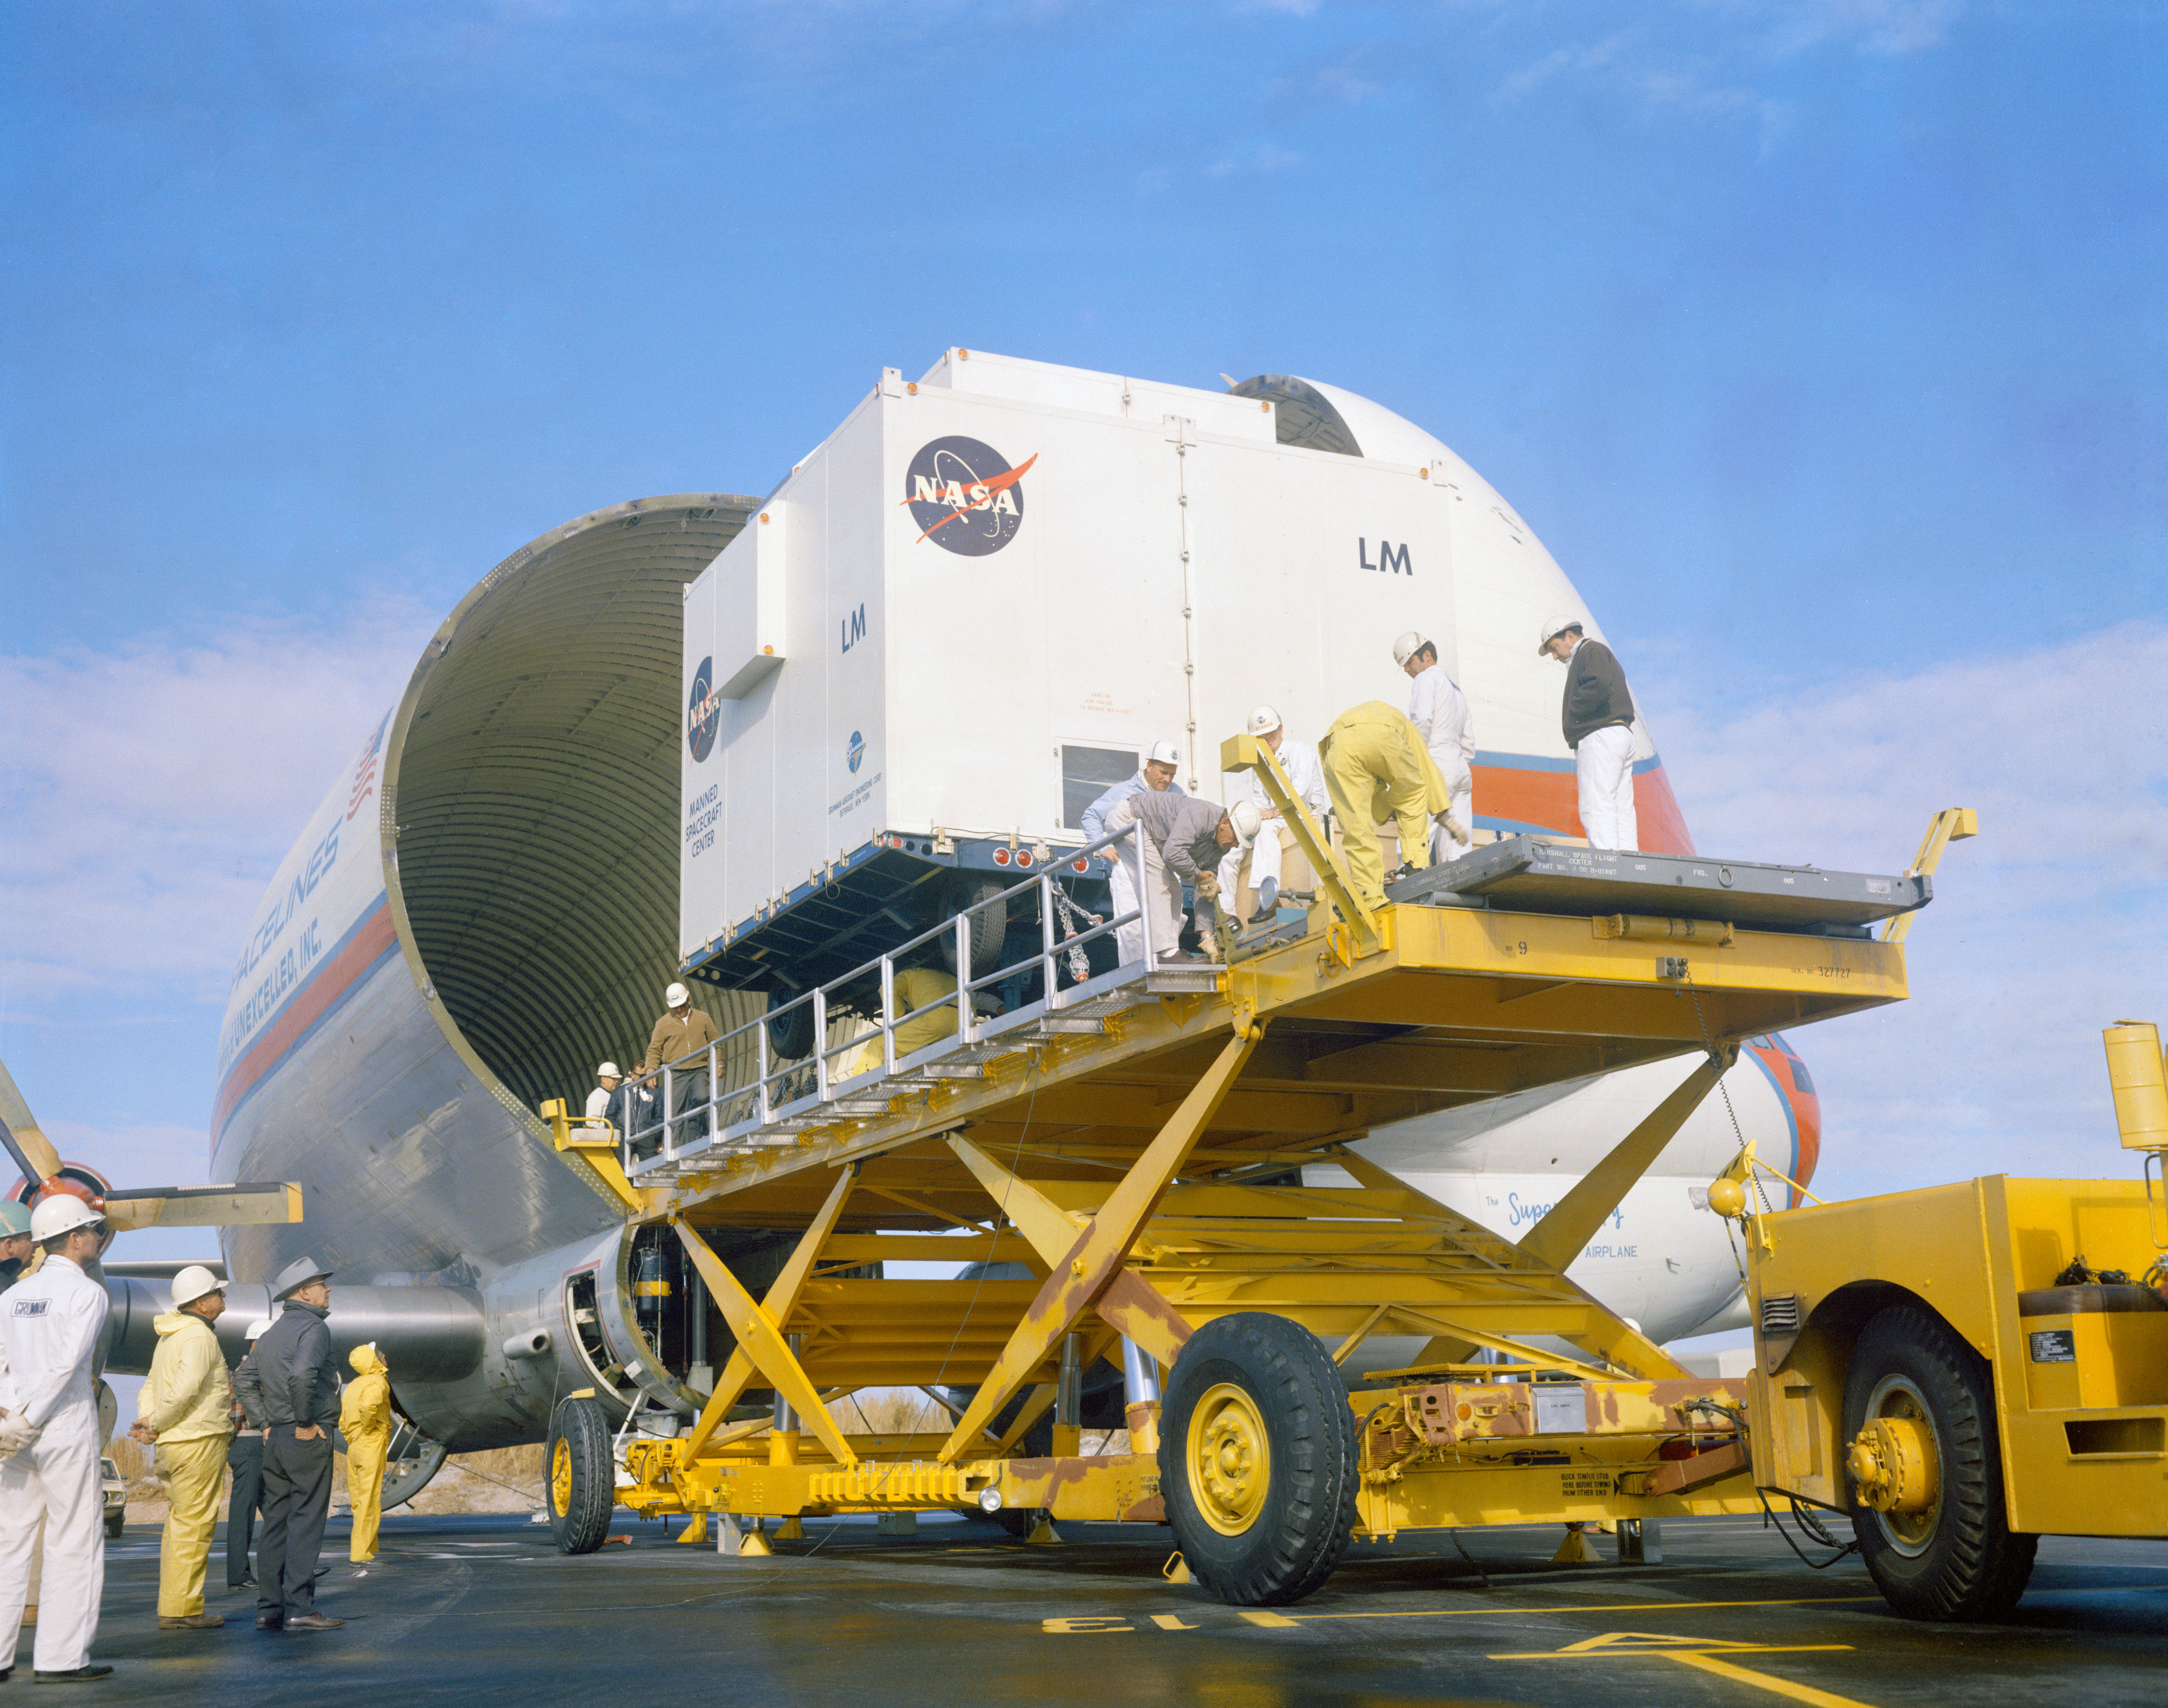 The Lunar Module for Apollo 11 arrives at NASA’s Kennedy Space Center (KSC) in Florida